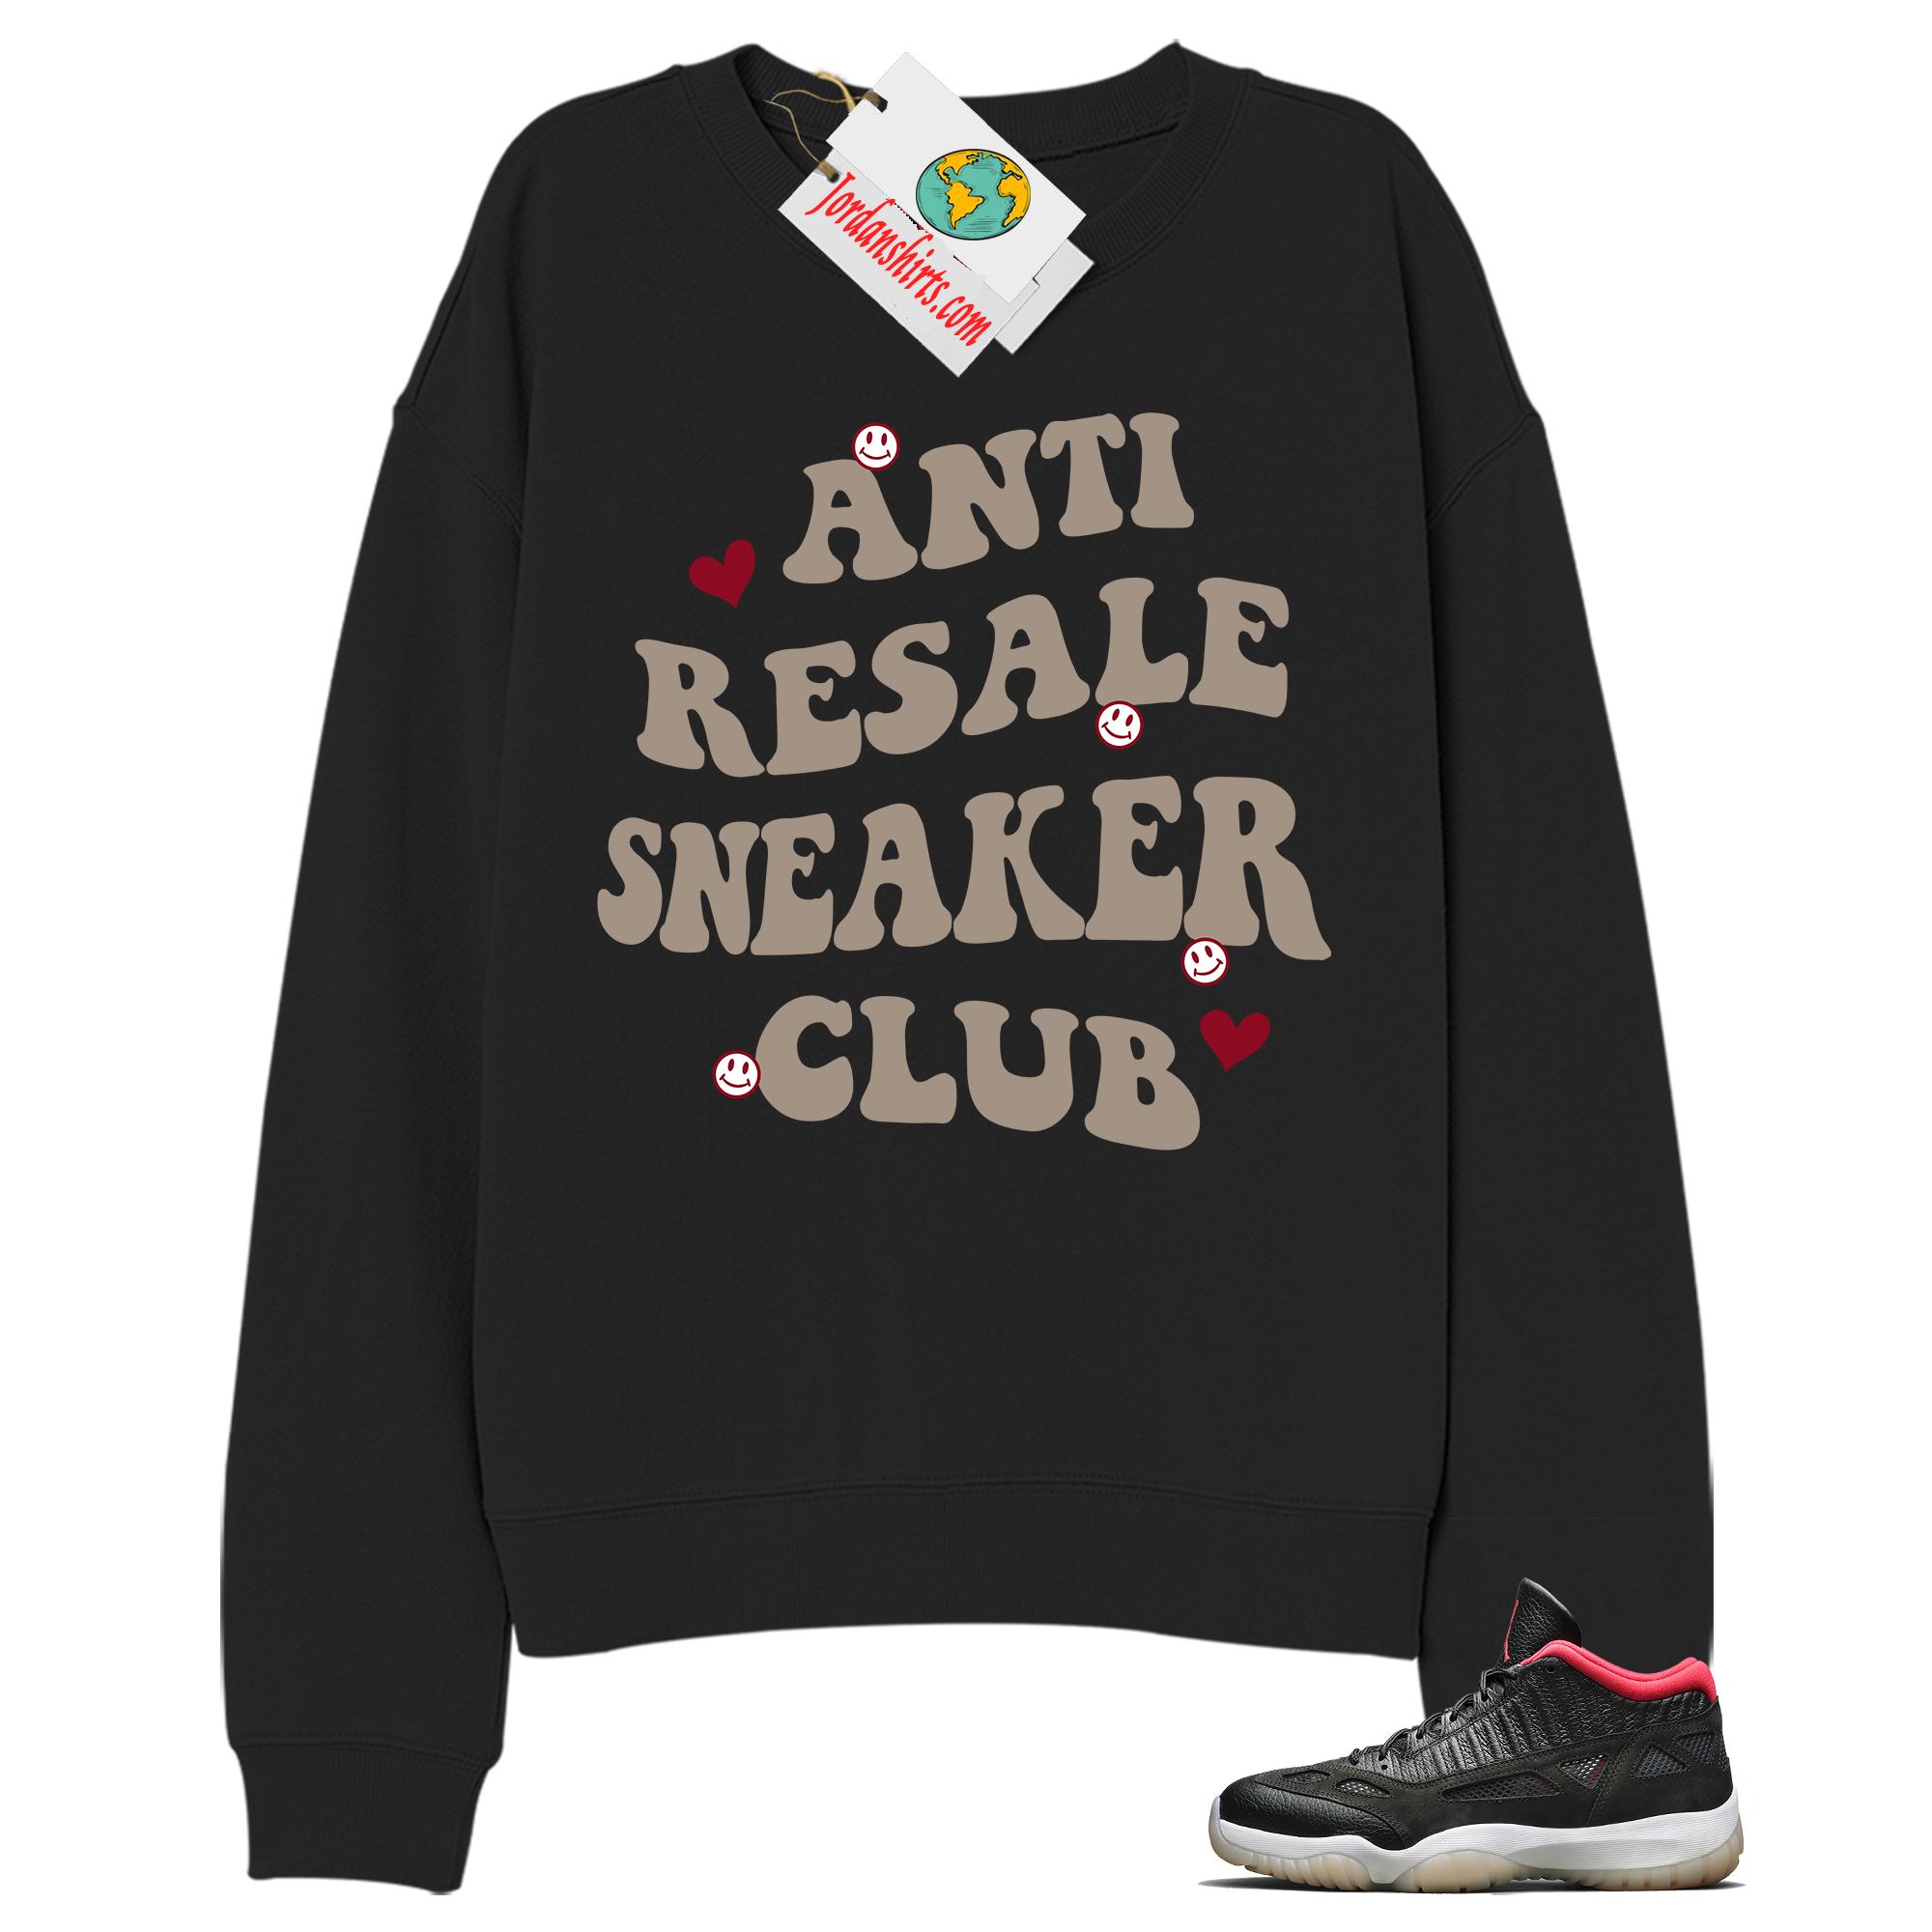 Jordan 11 Sweatshirt, Anti Resale Sneaker Club Black Sweatshirt Air Jordan 11 Bred 11s Plus Size Up To 5xl